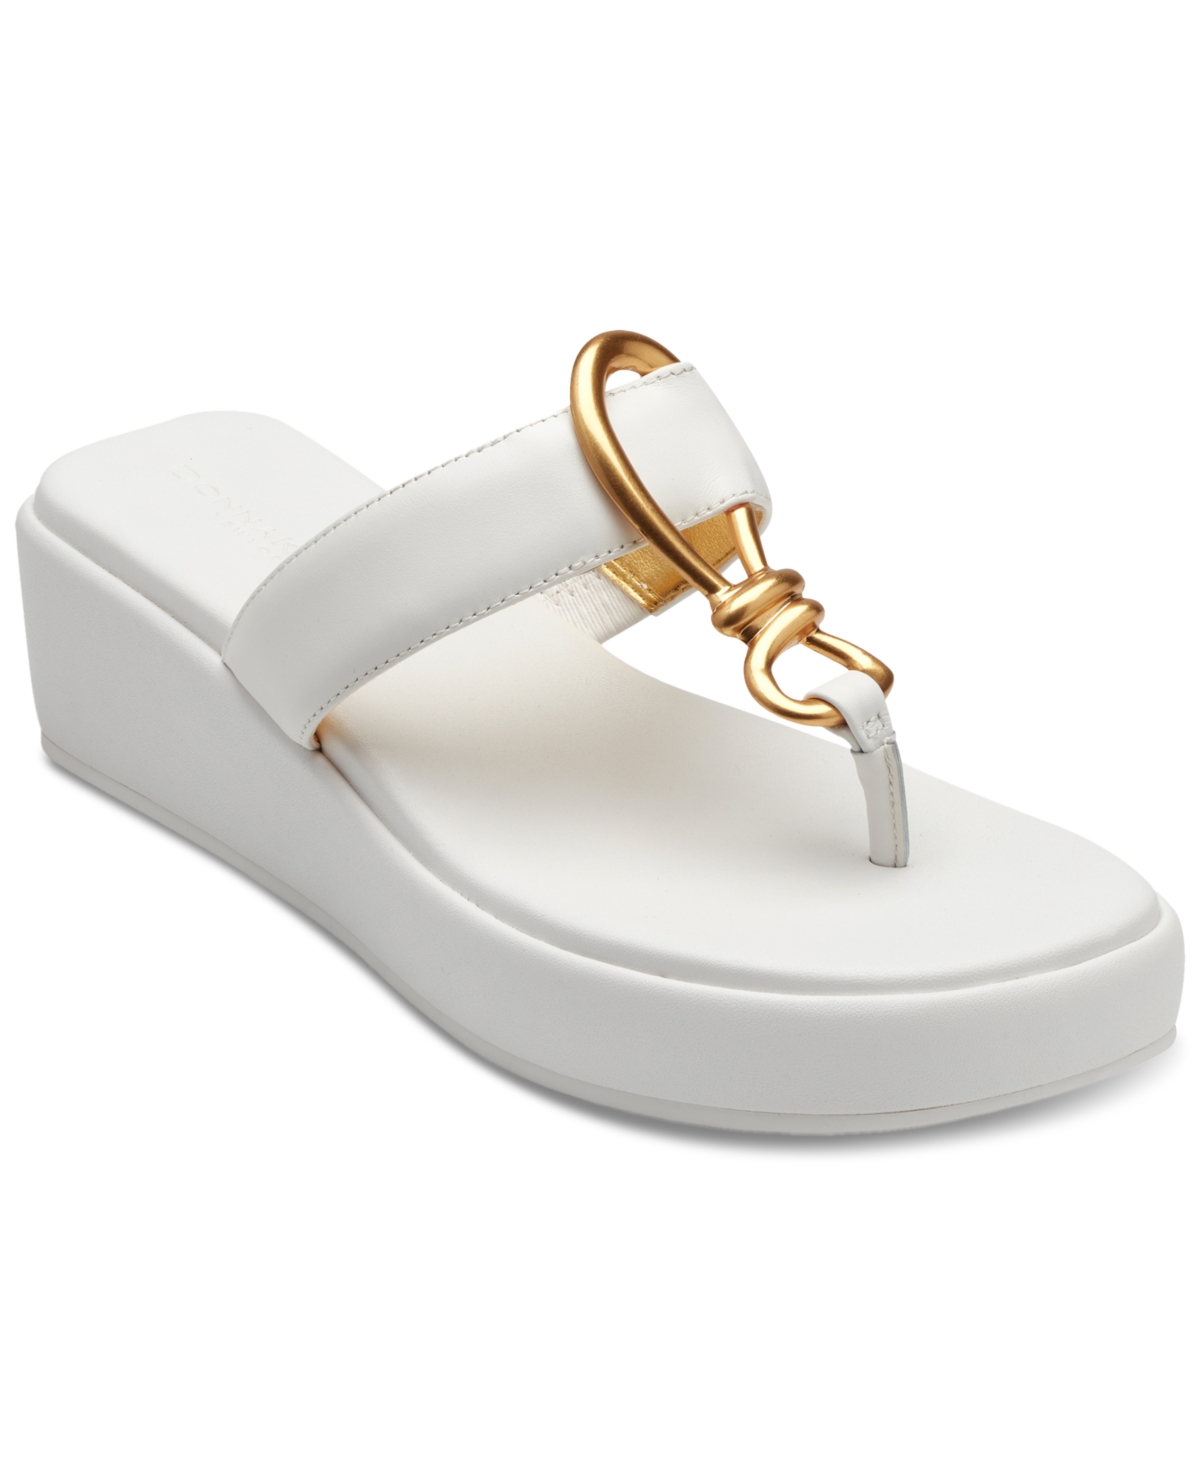 Harlyn Hardware Wedge Sandals - Bright White